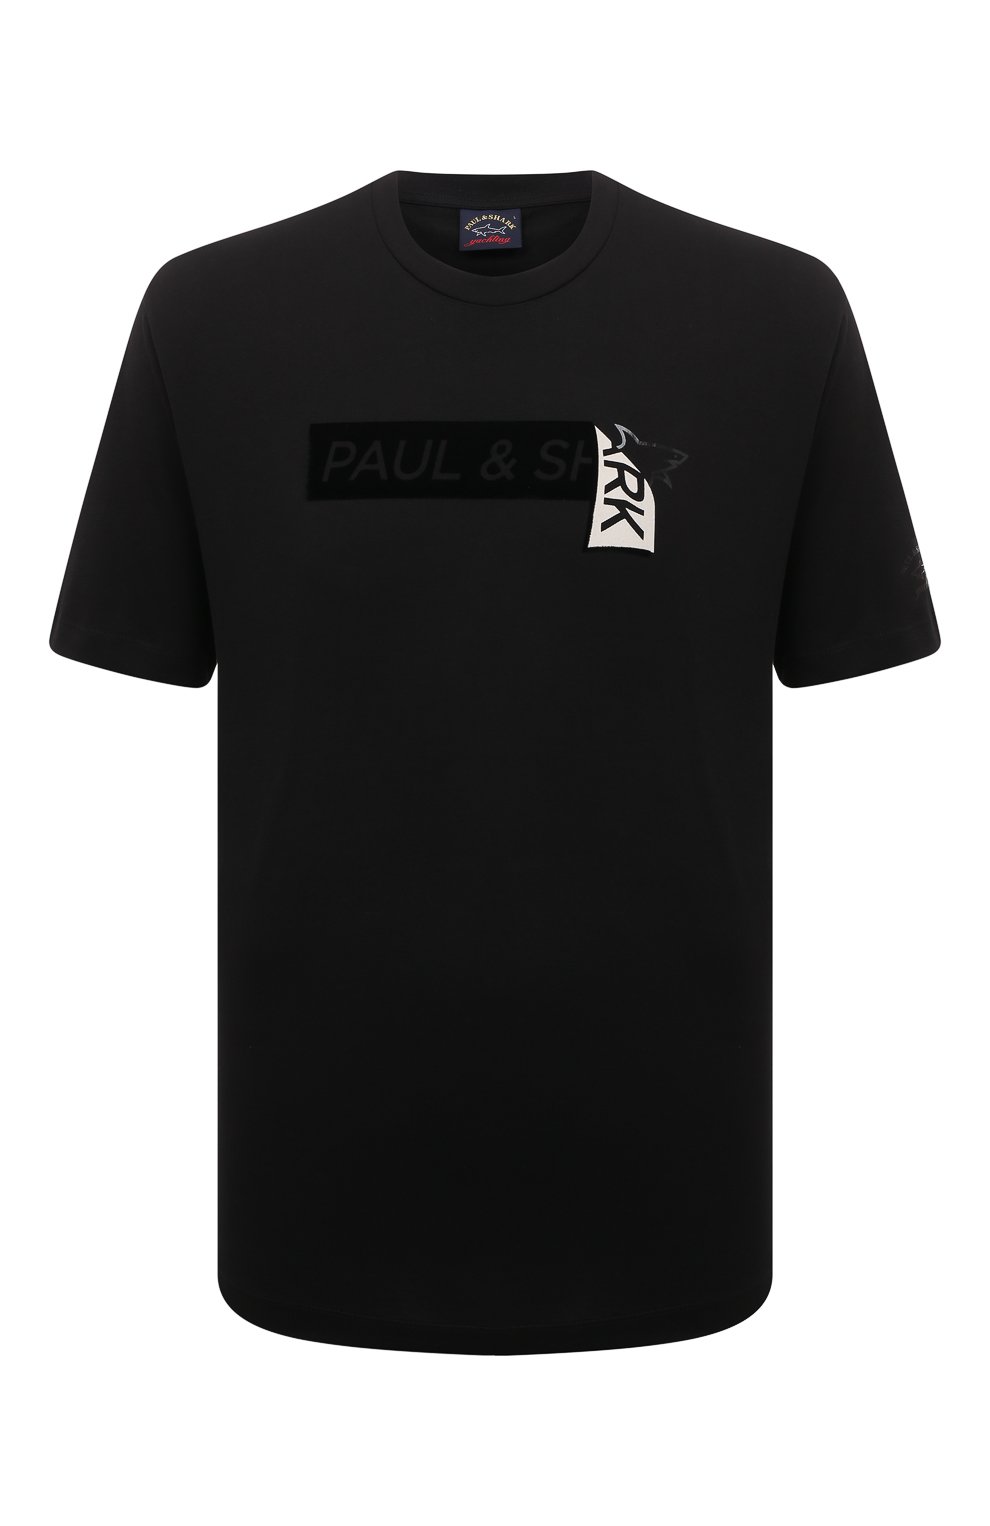 Хлопковая футболка Paul&Shark 13311635, цвет чёрный, размер 50